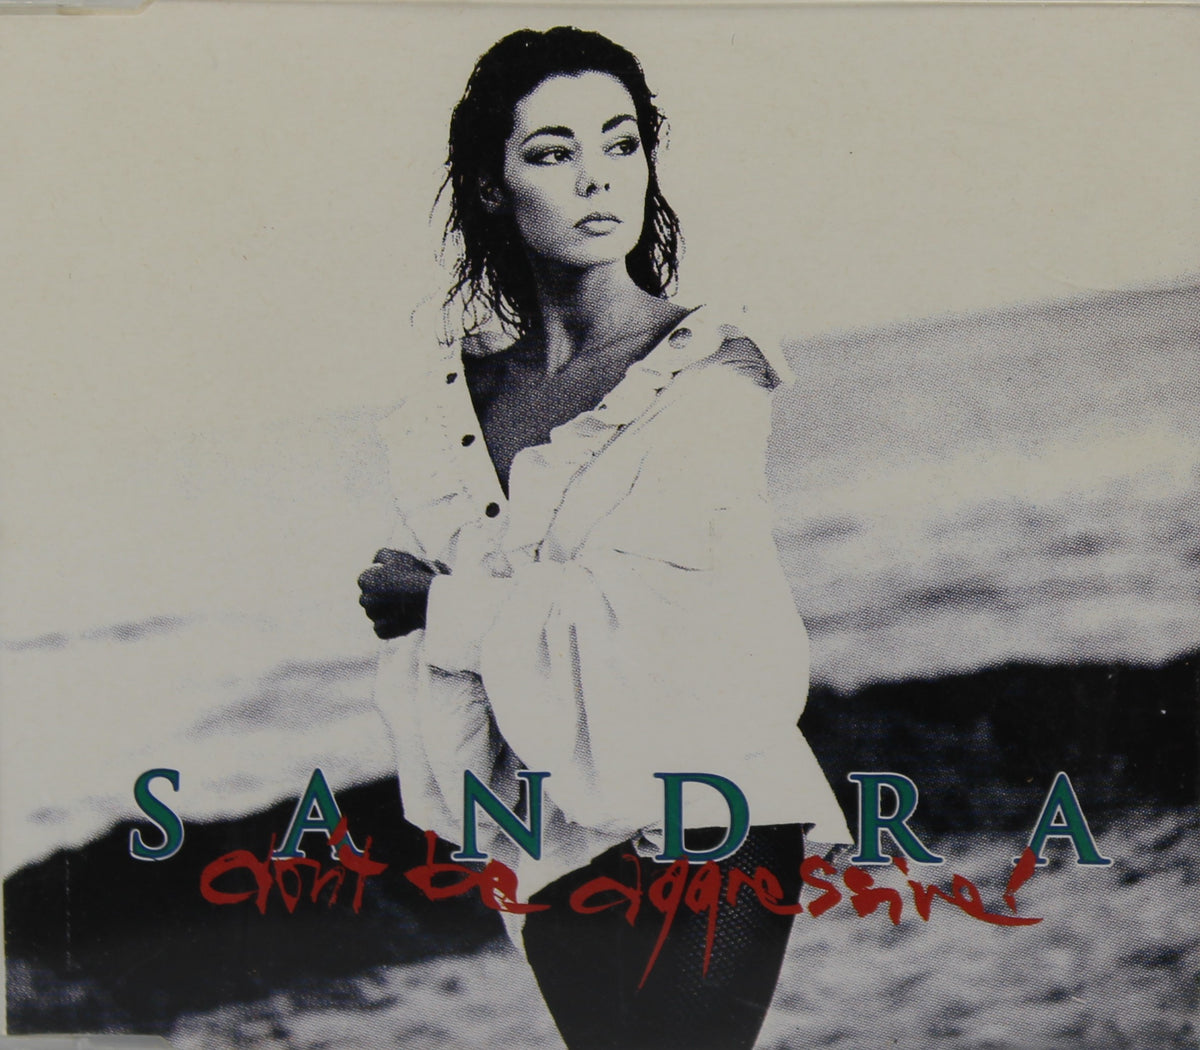 Sandra – Don&#39;t Be Aggressive, CD, Maxi-Single, Silver Disc, Germany 1992